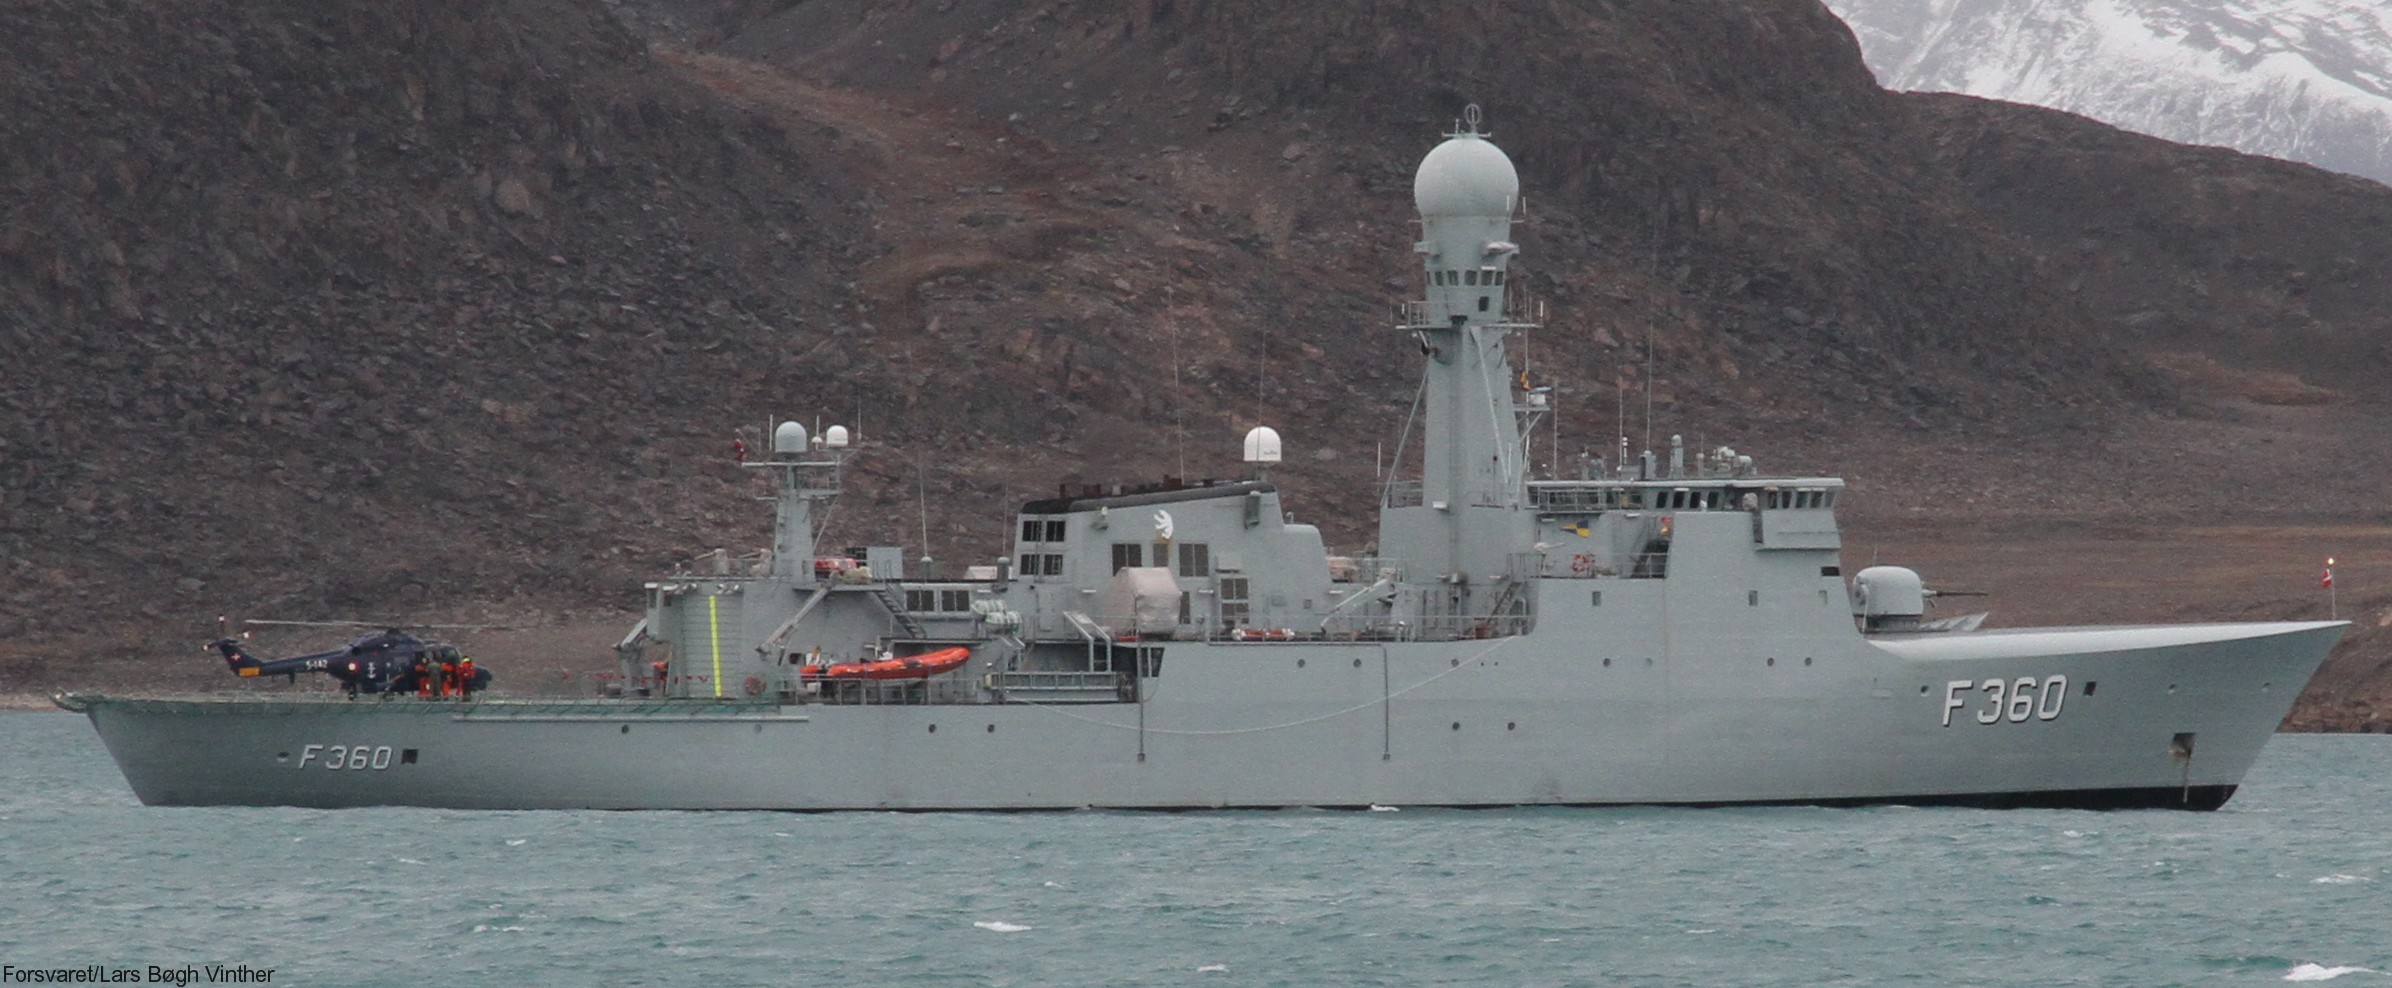 f-360 hdms hvidbjornen thetis class ocean patrol frigate royal danish navy kongelige danske marine kdm inspektionsskibet 22